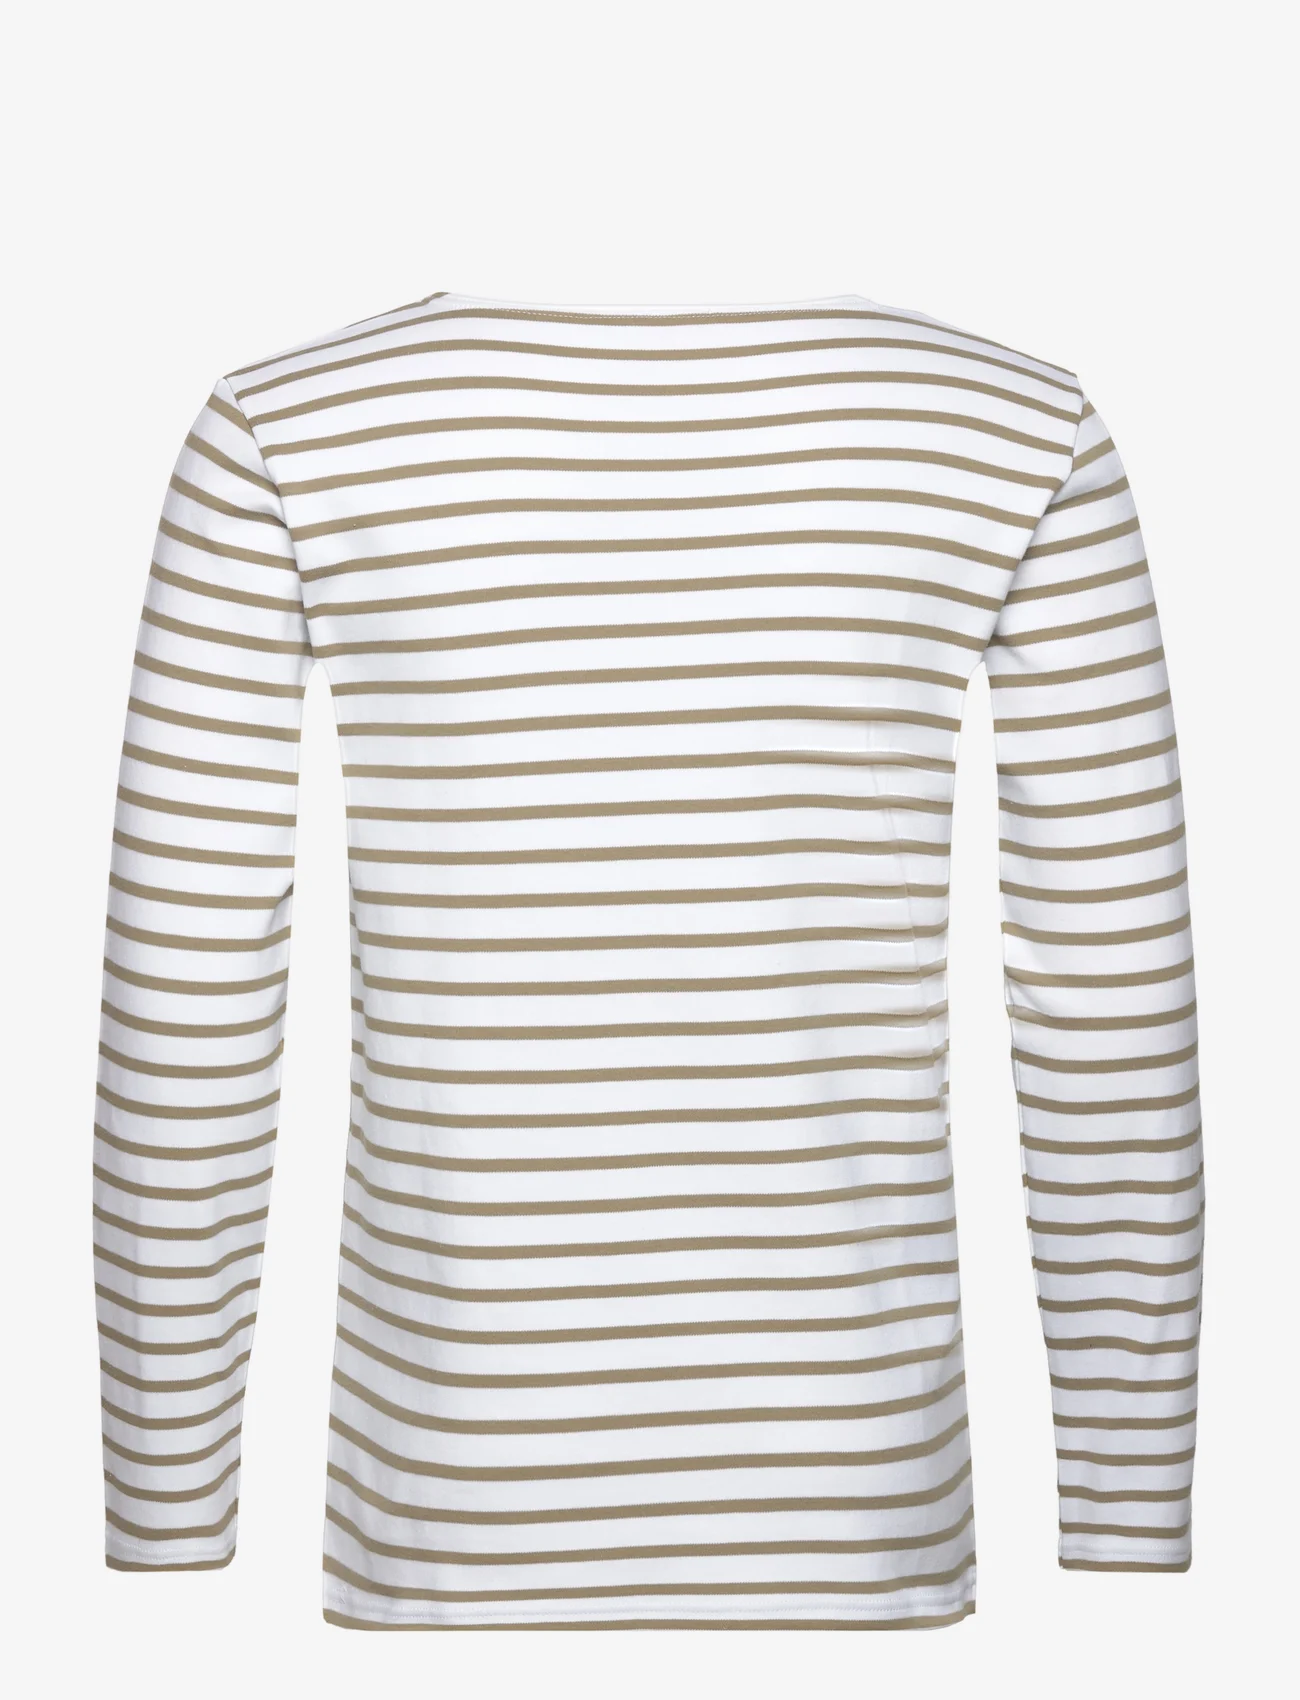 Armor Lux - Breton Striped Shirt Héritage - langærmede t-shirts - white/argile e23 - 1